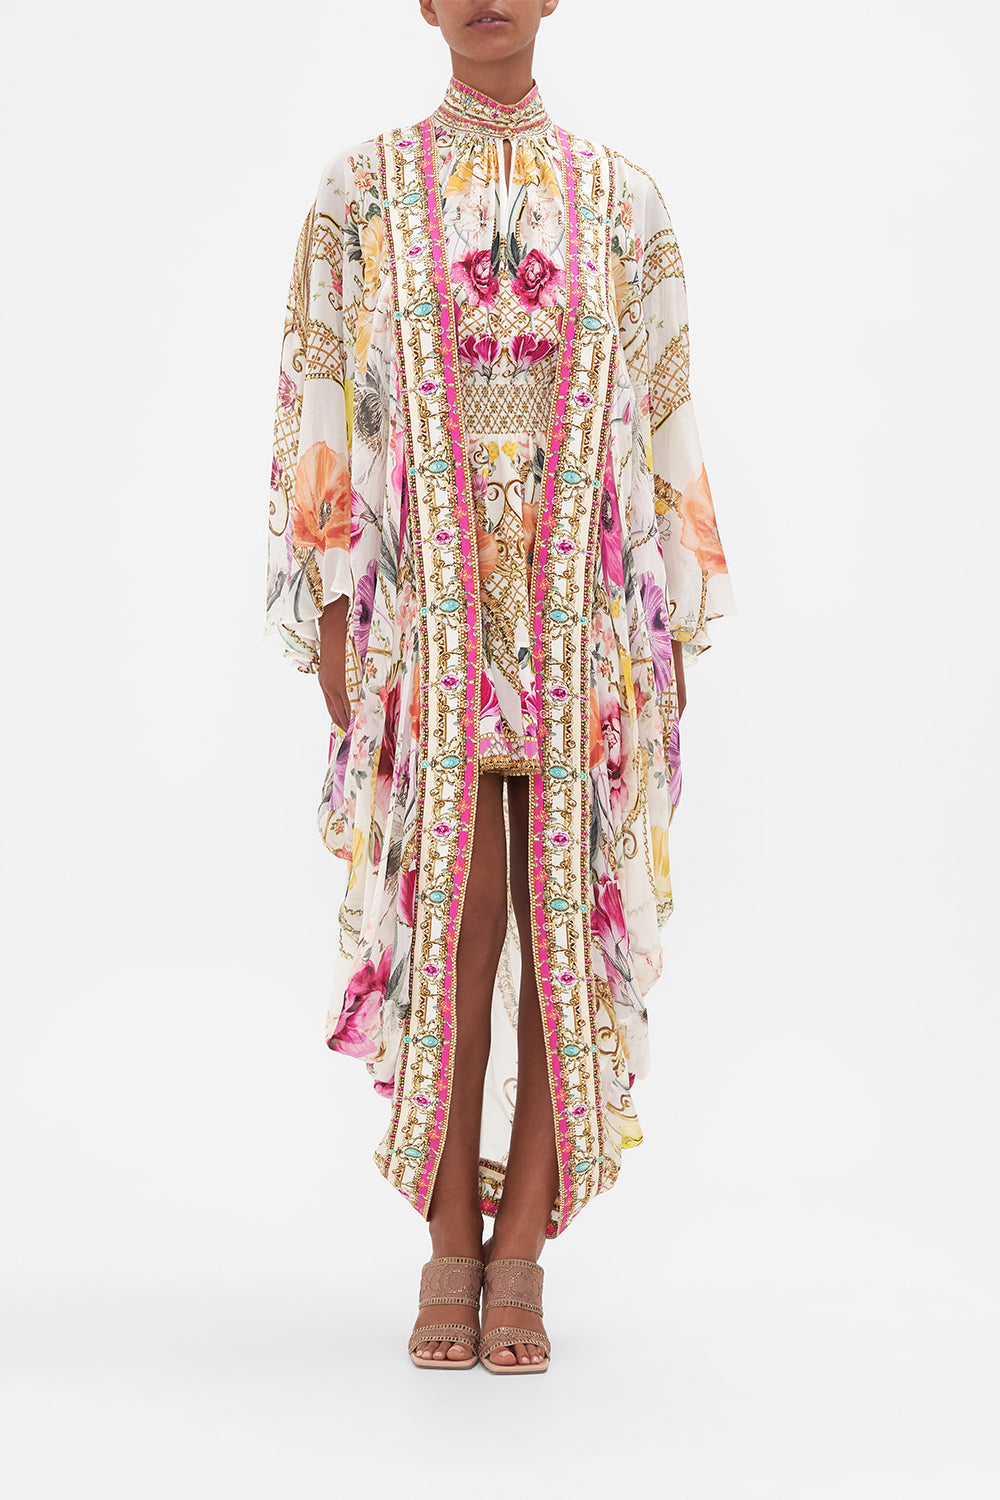 Front view of model wearing CAMILLA silk floral kimono in Destiny Calling print